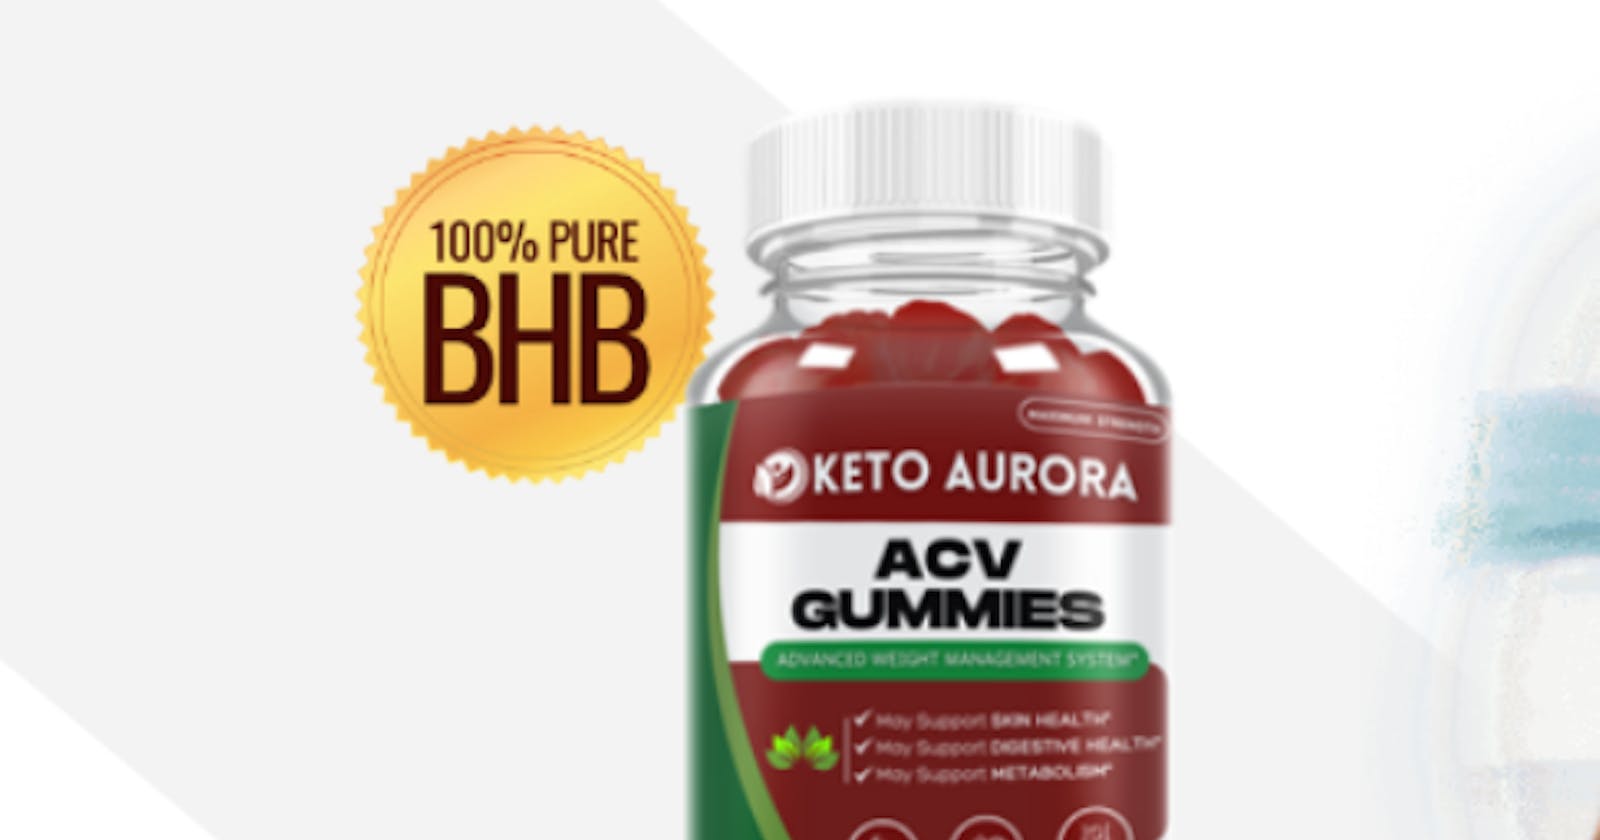 Keto Aurora ACV Gummies Weight loss Reviews?